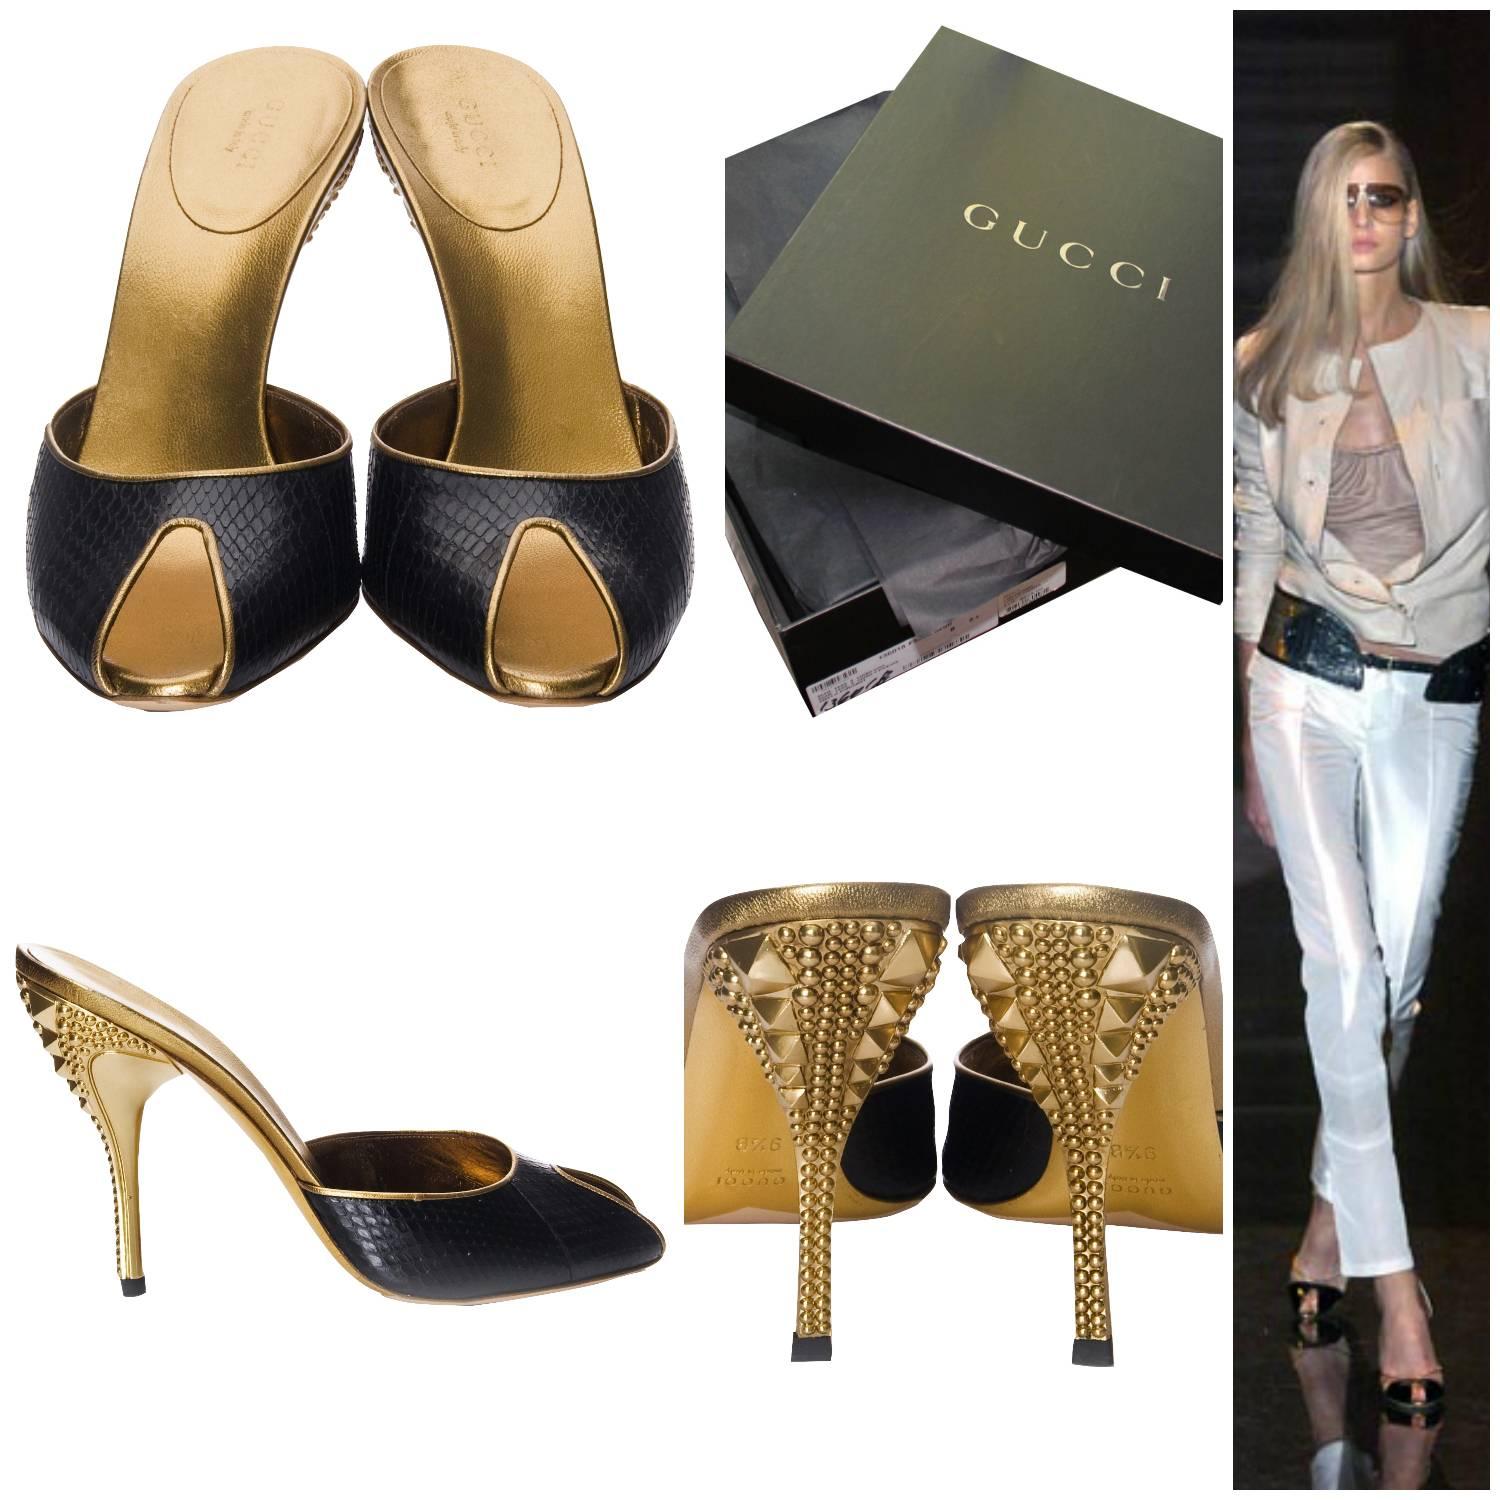 Gucci Horsebit Heels
Brand New
* Stunning in Black Snakeskin
* Studded Gold Heel
* Size: 9.5
* Leather Insole
* Open toe
* 4.5